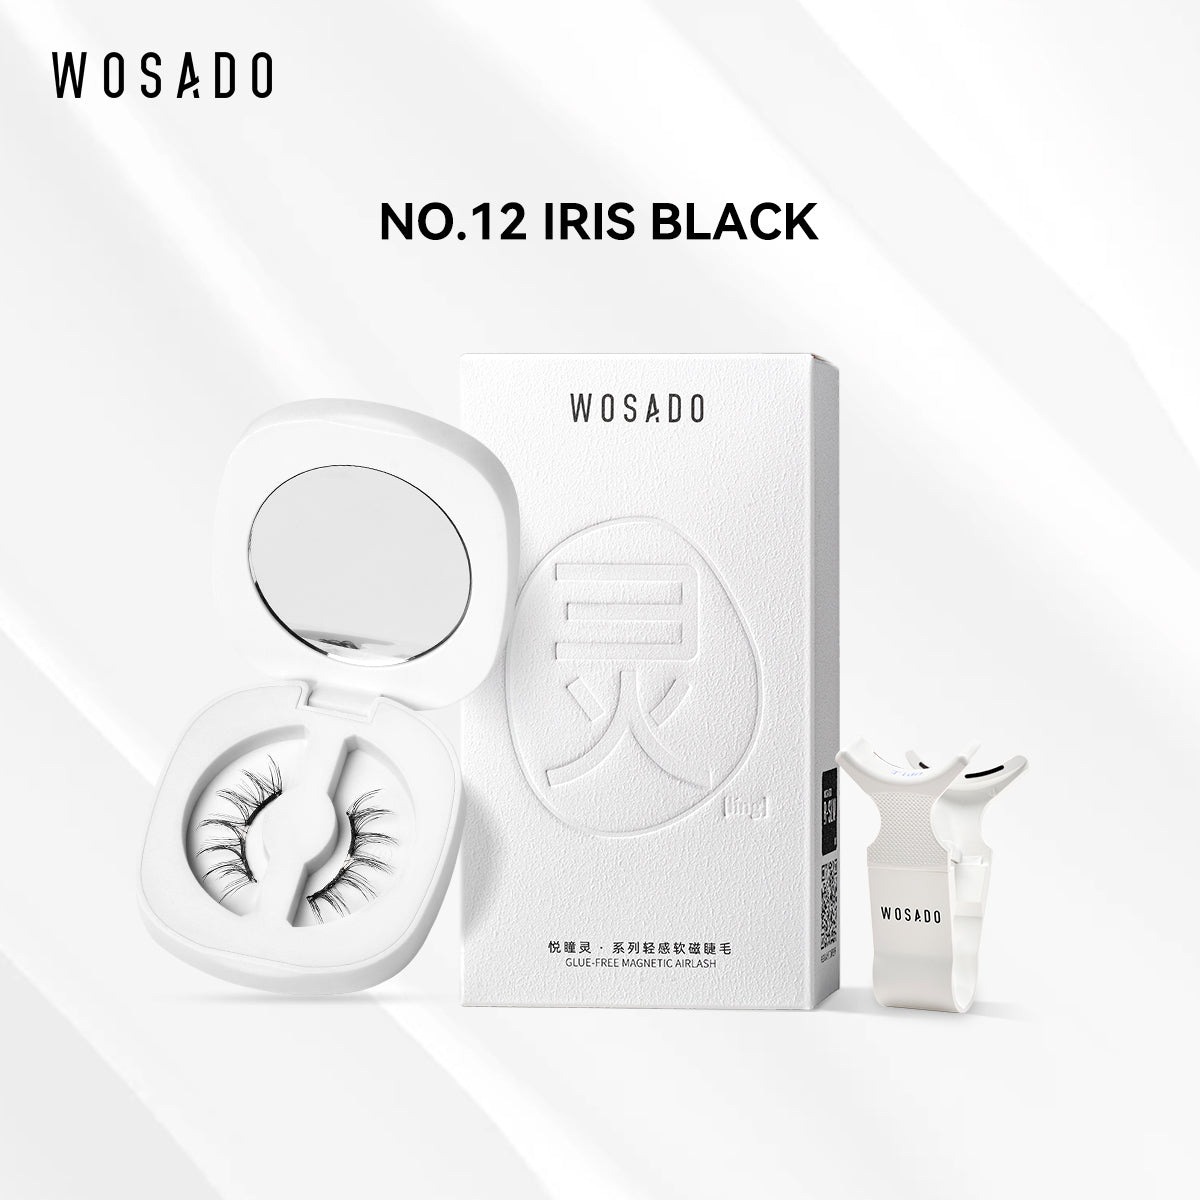 【WOSADO】NO.12 Iris Black